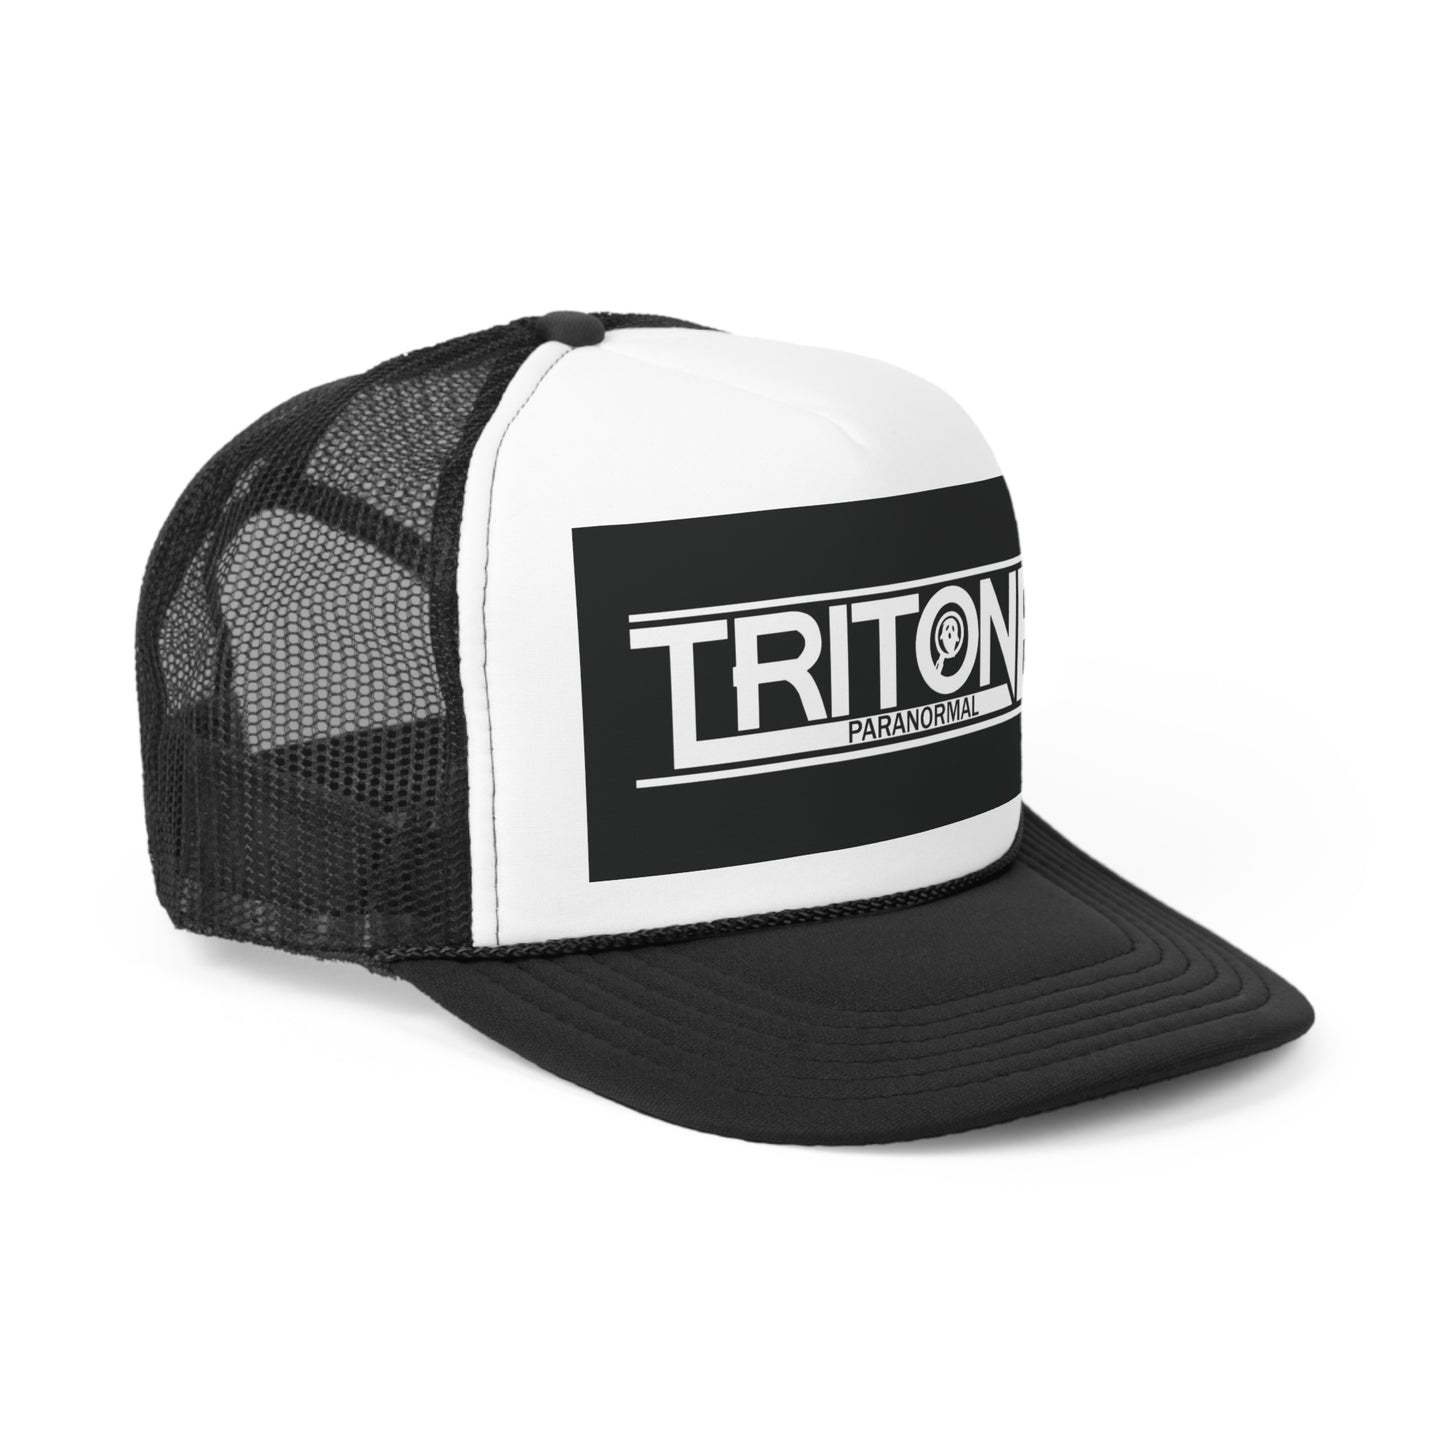 Tritone Paranormal Trucker Hat